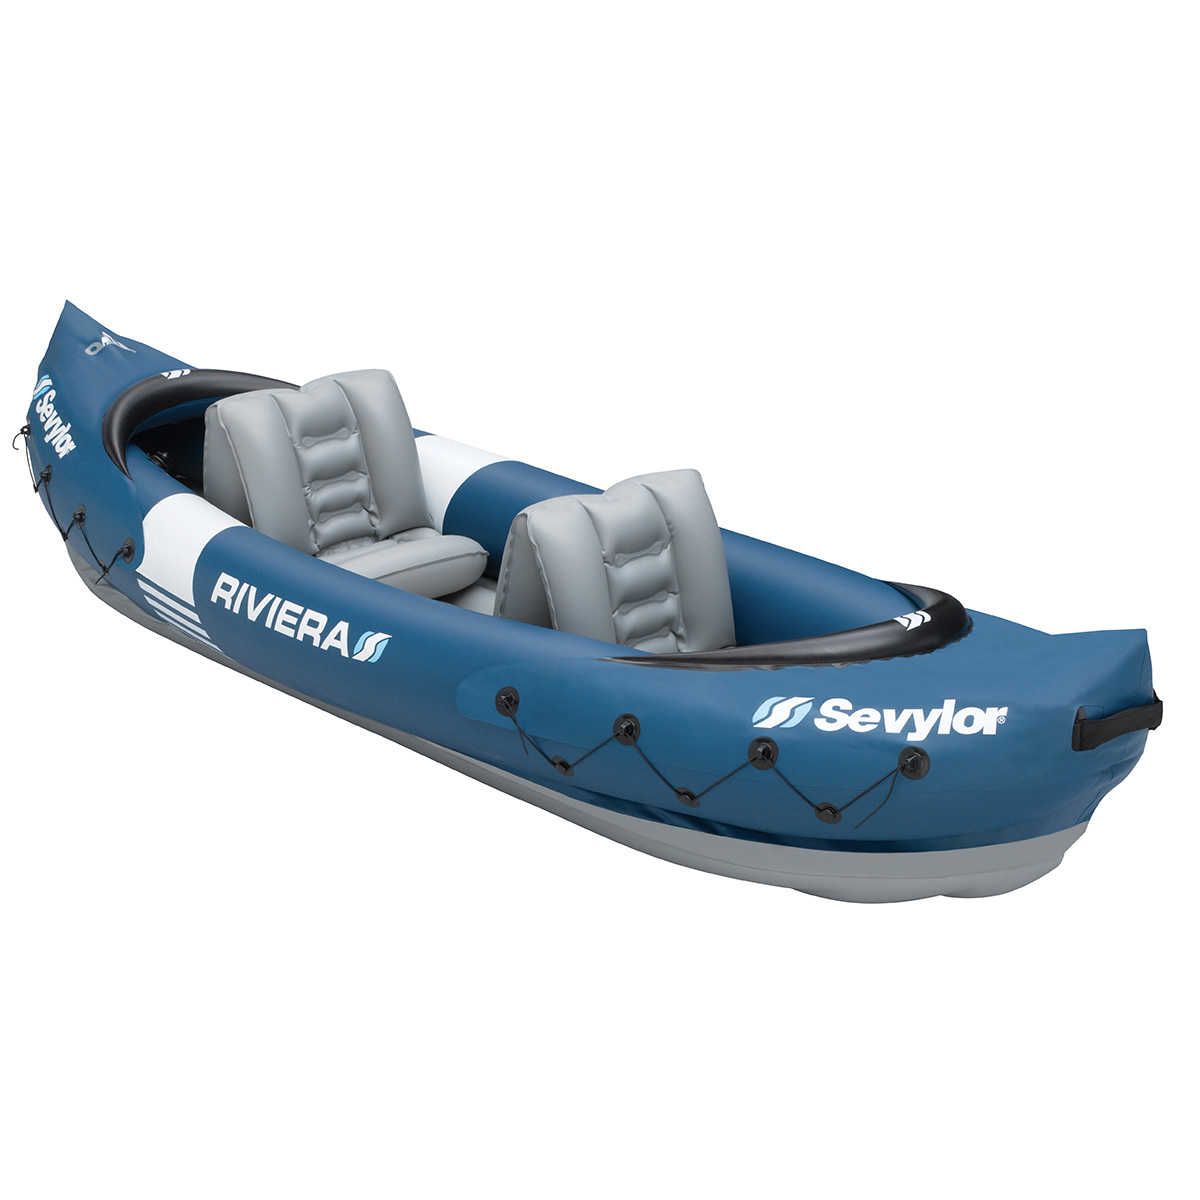 riviera-kayak-loisir-2-personnes-bleu-pagaie-back-systeme